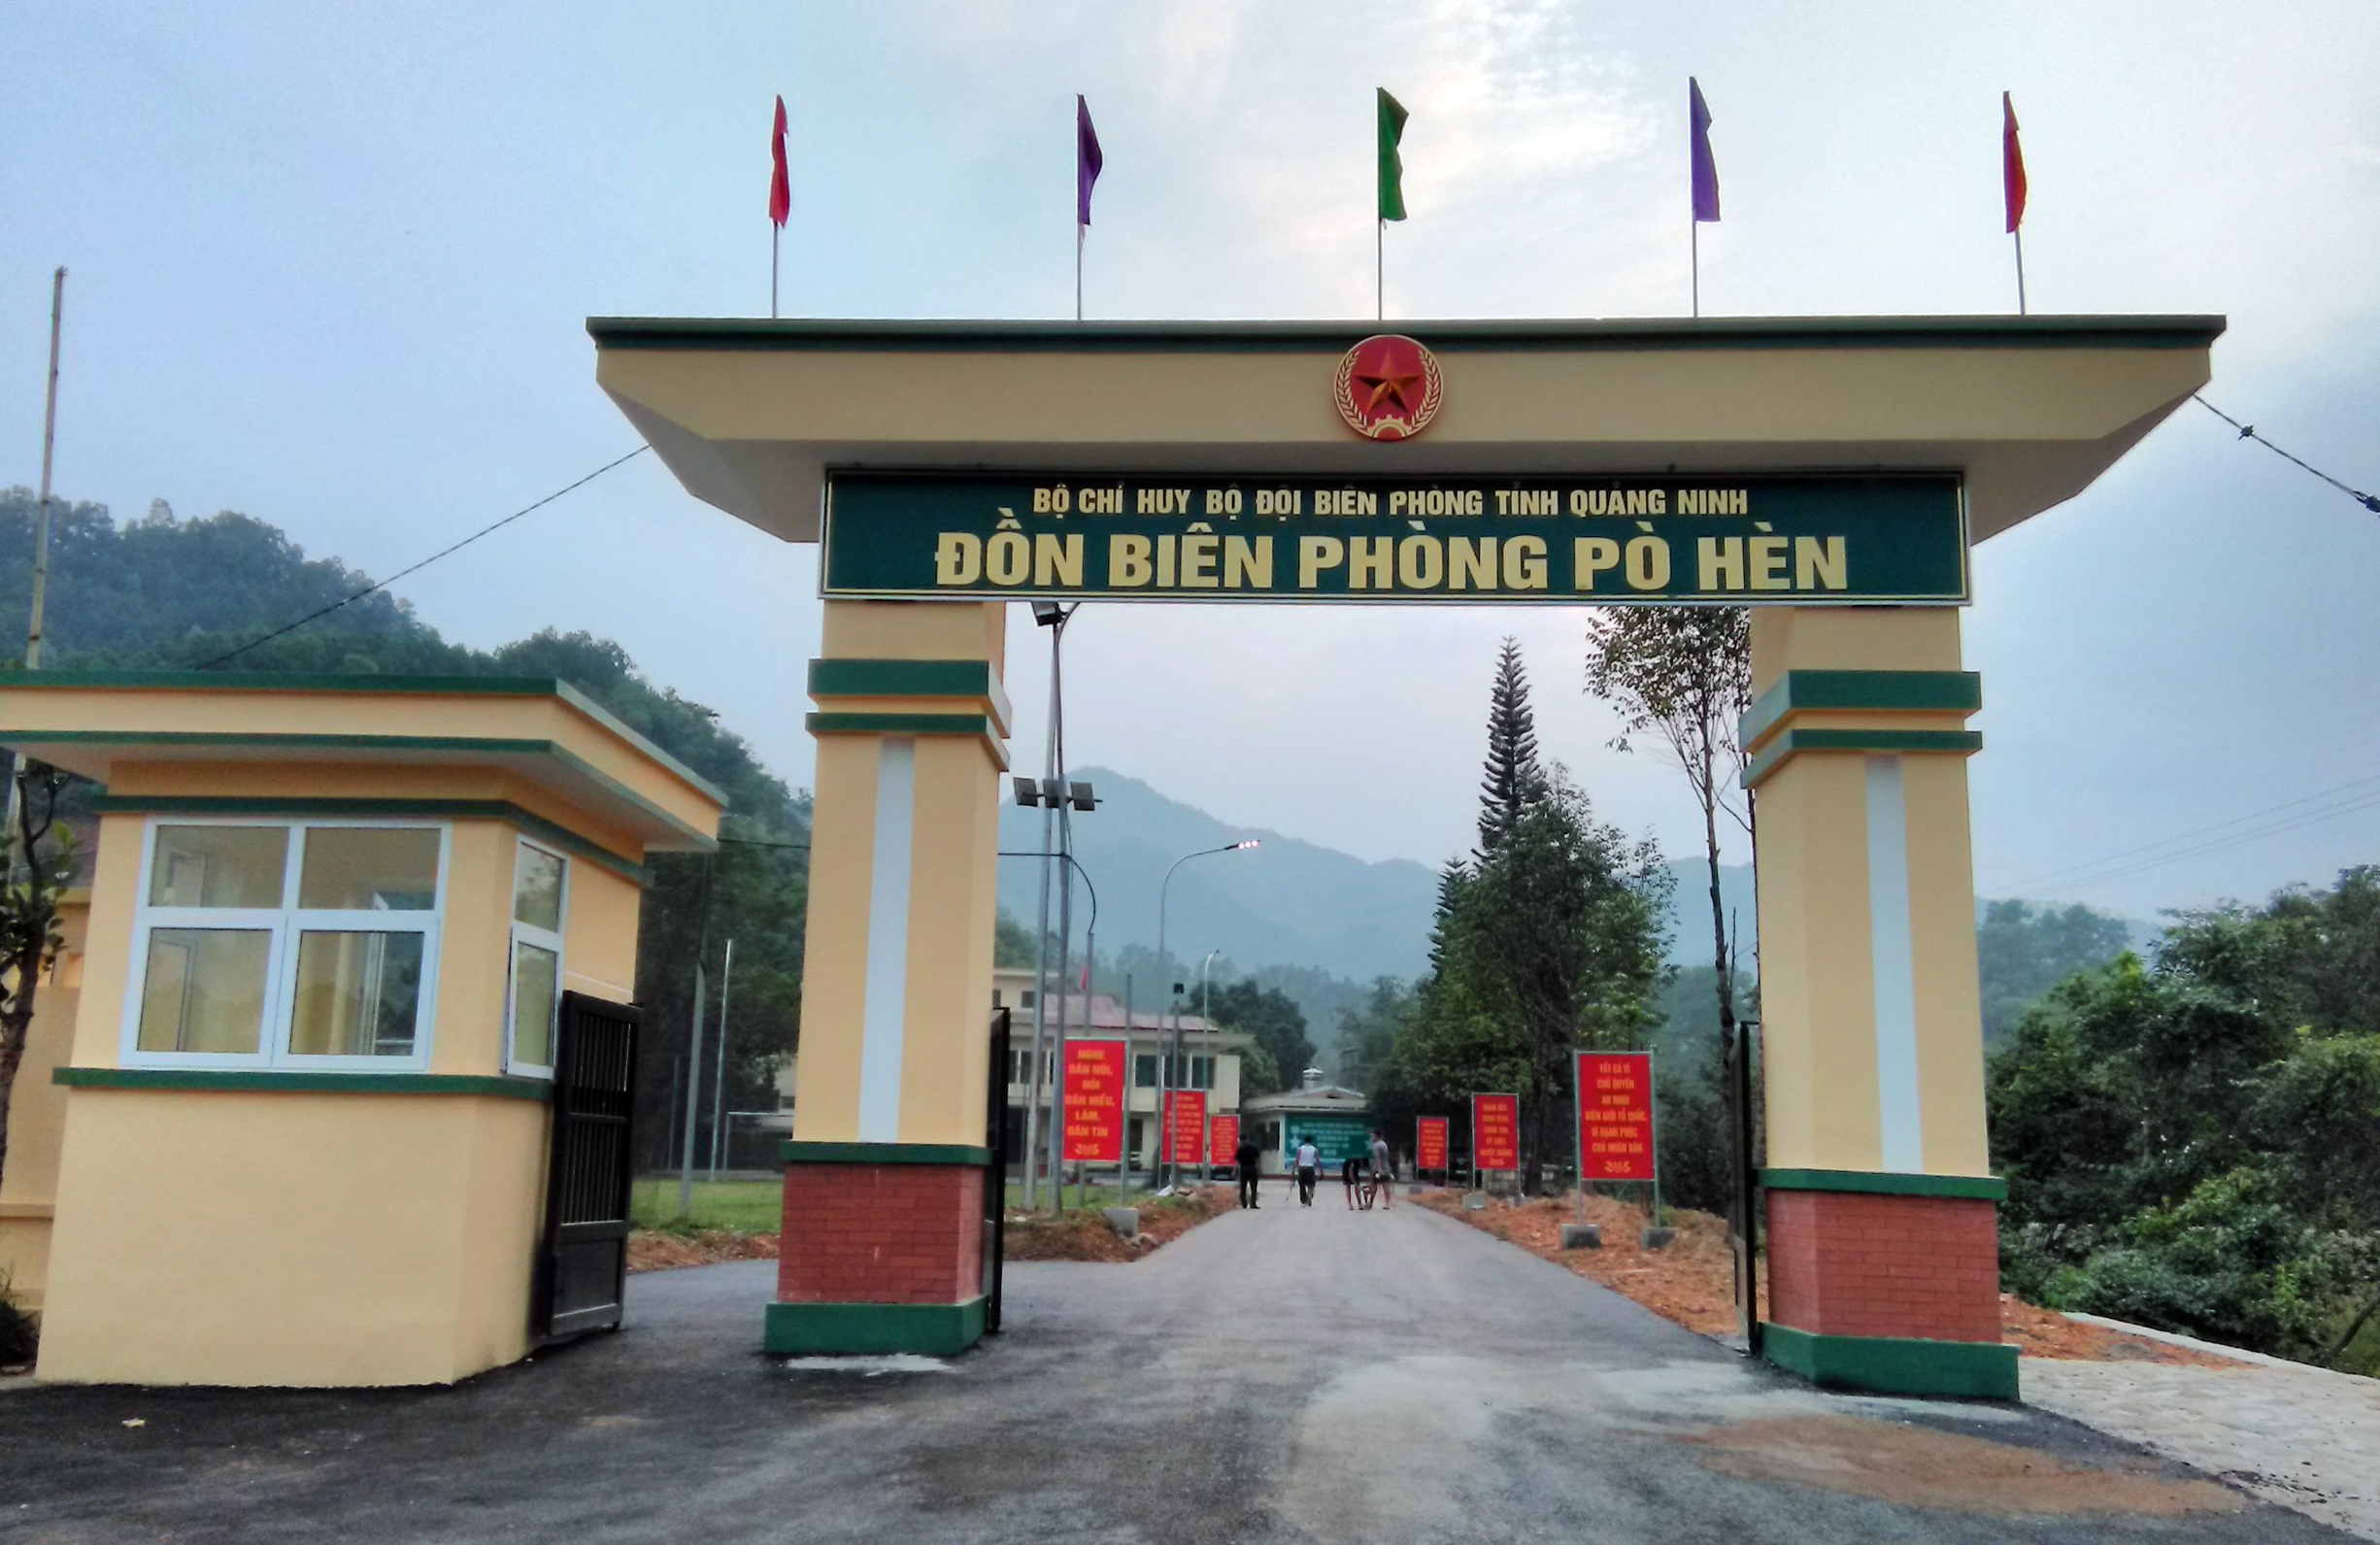 Po Hen Border Post (Photo: VietnamPlus)